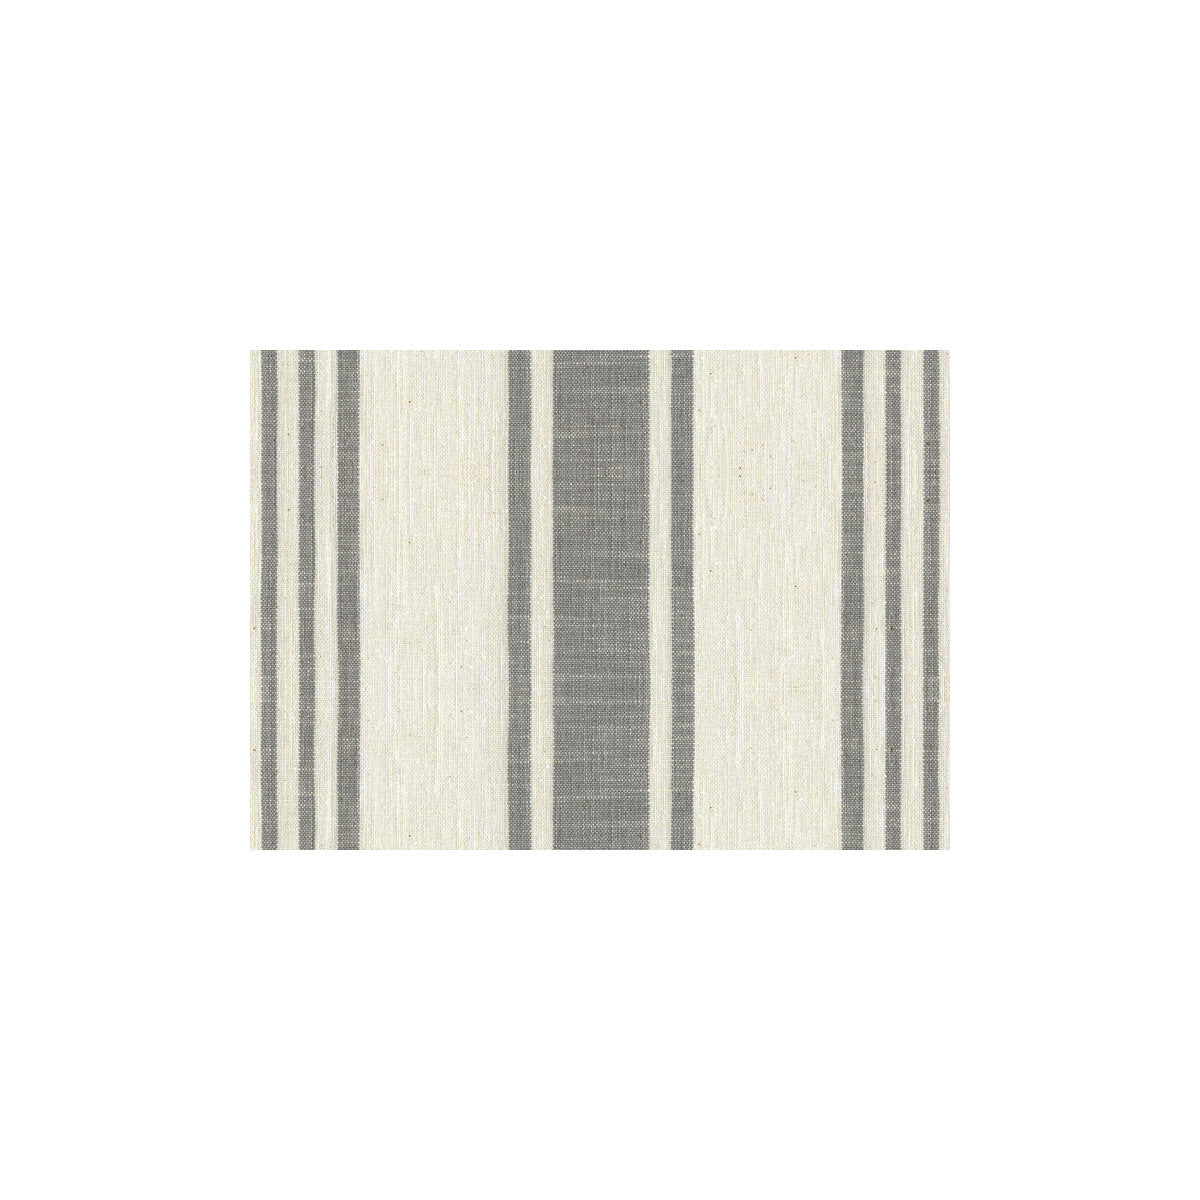 Kravet Basics fabric in 3685-11 color - pattern 3685.11.0 - by Kravet Basics in the Gis collection